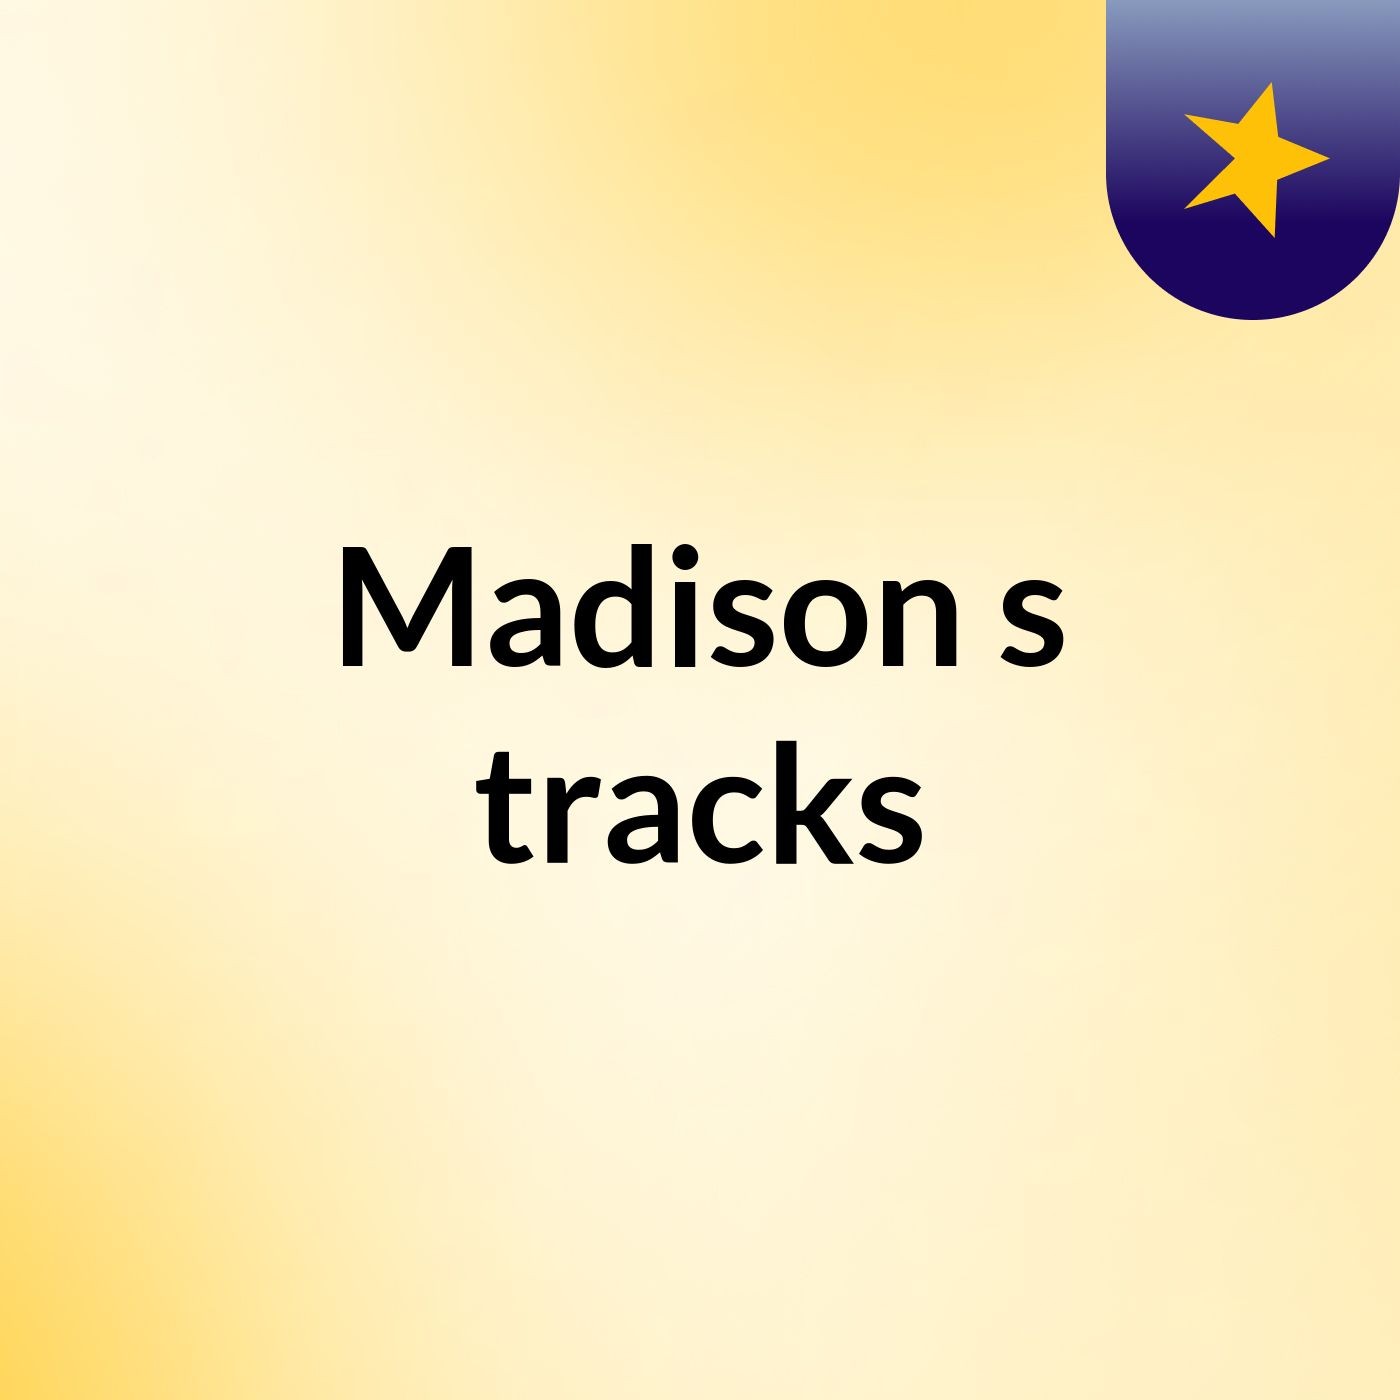 Madison's tracks